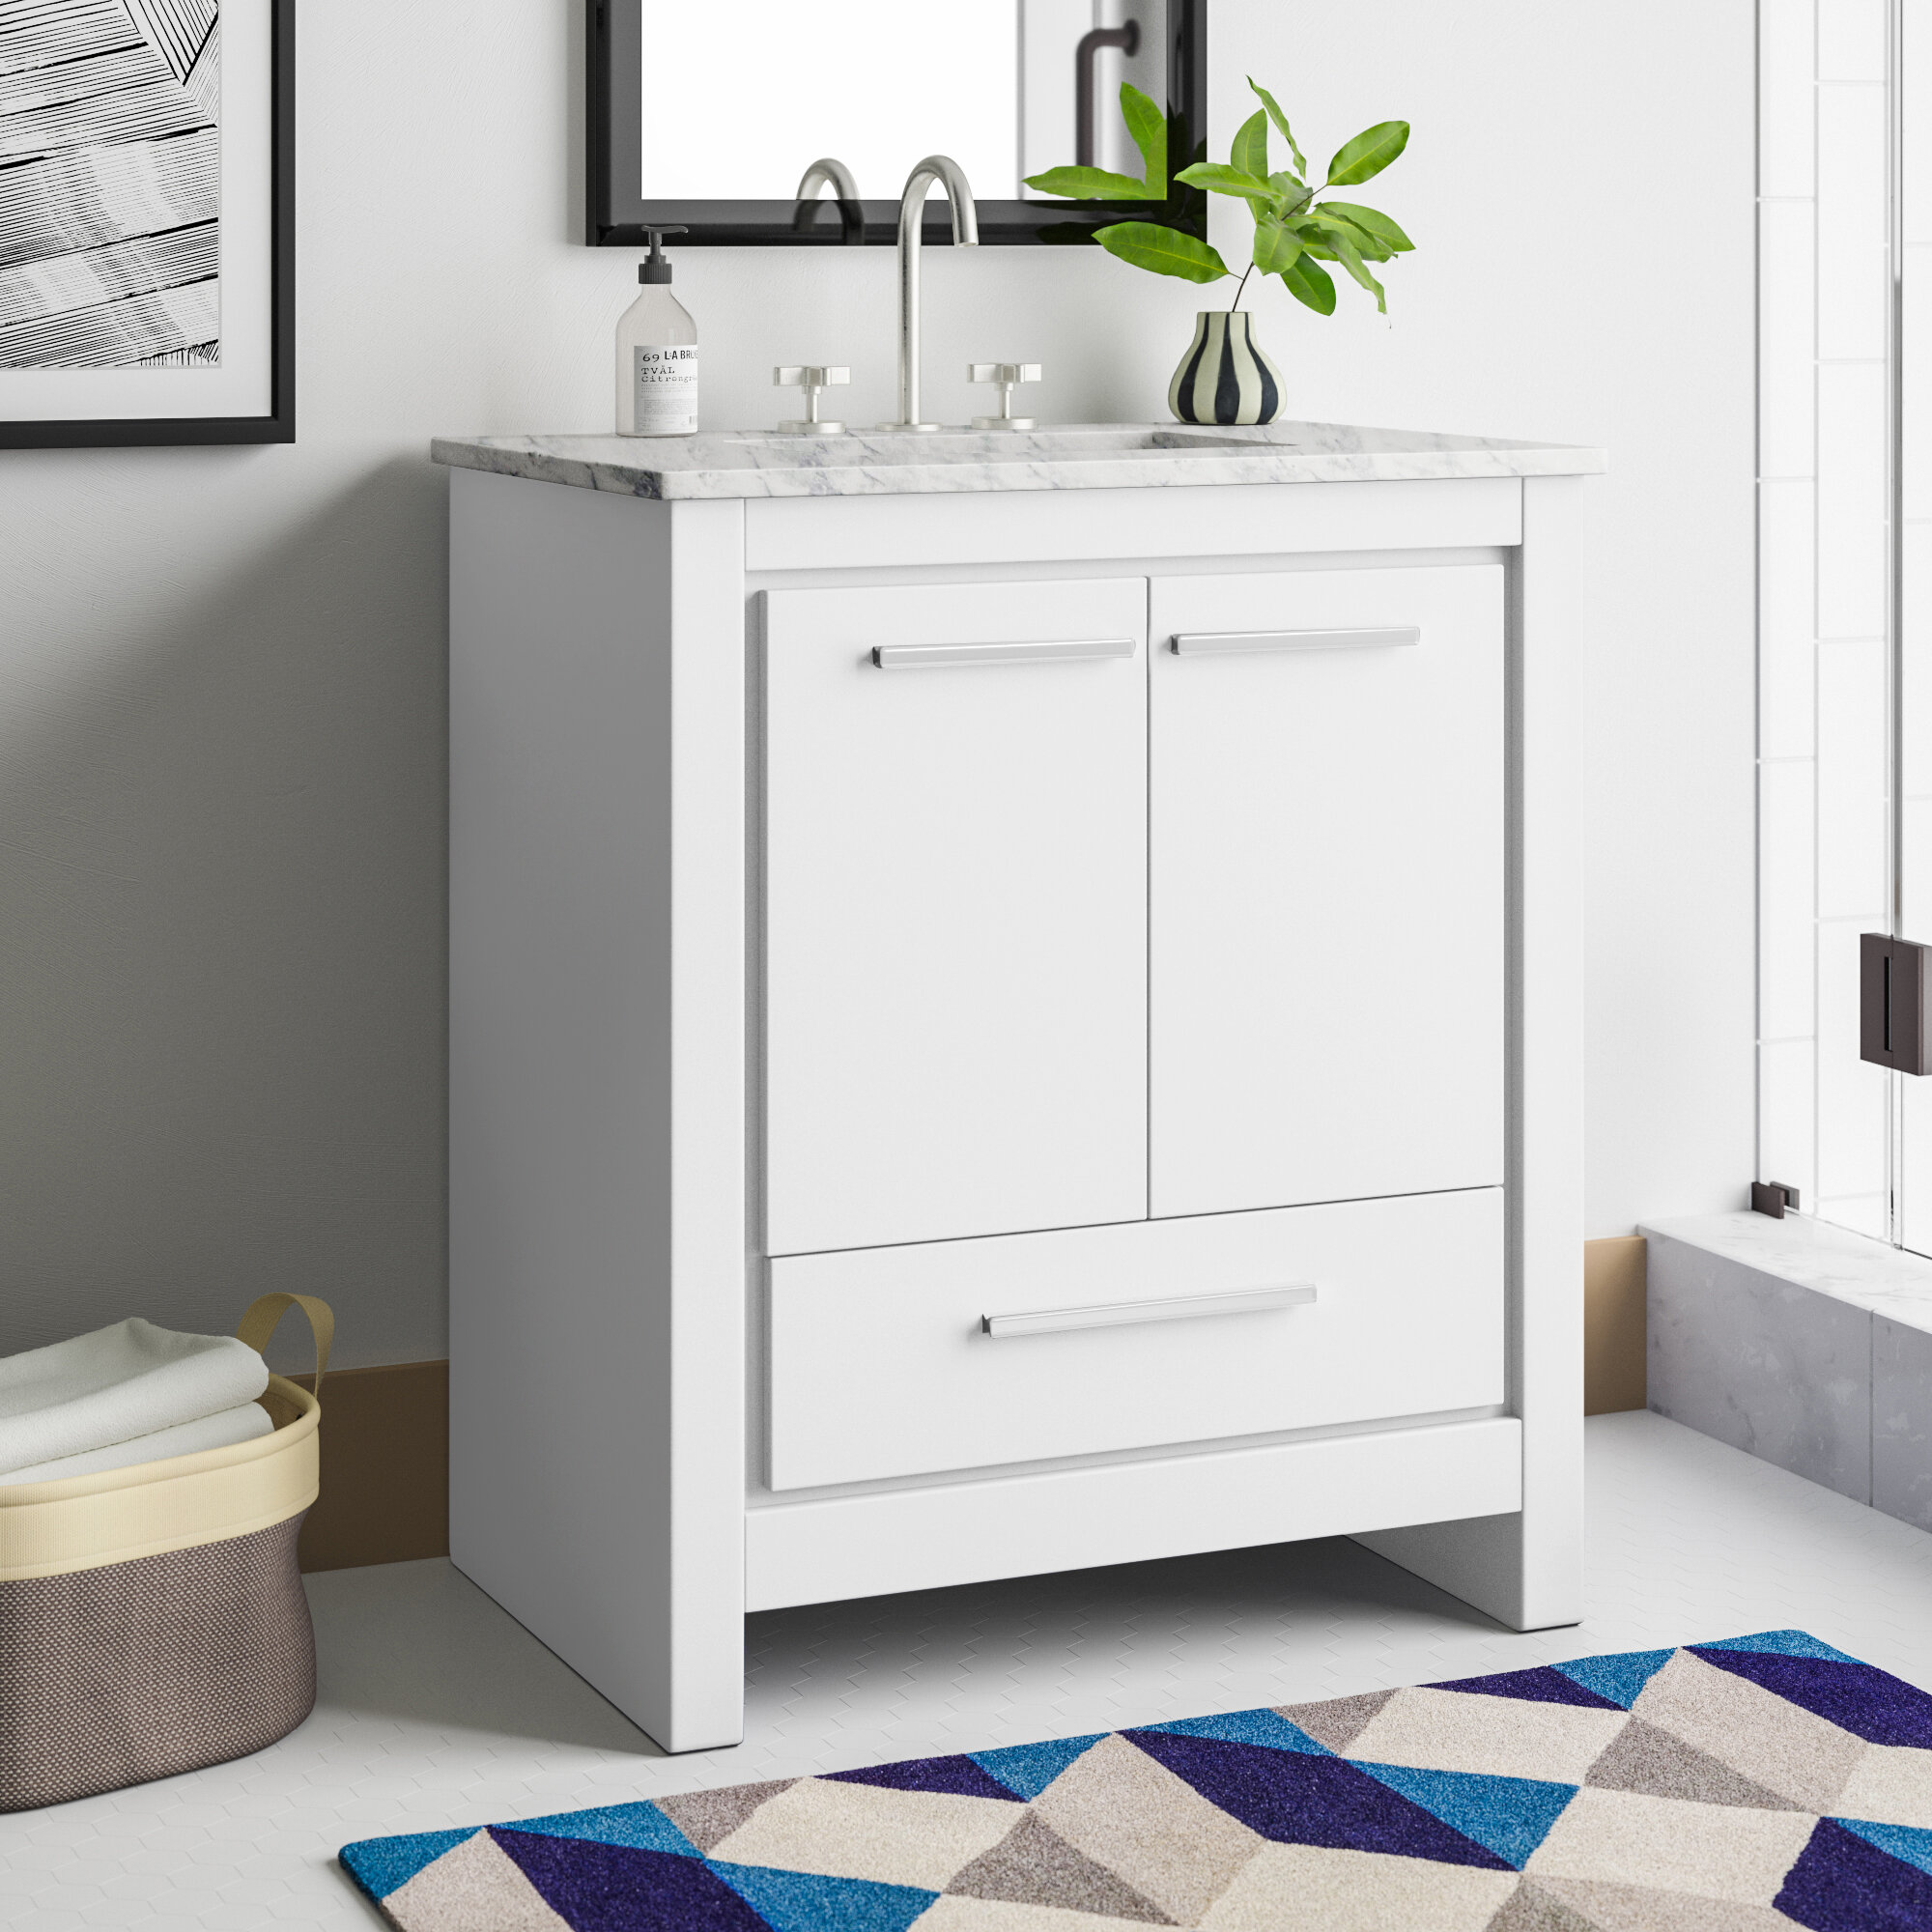 Zipcode Design Broadview 30 Single Bathroom Vanity Set Reviews Wayfair